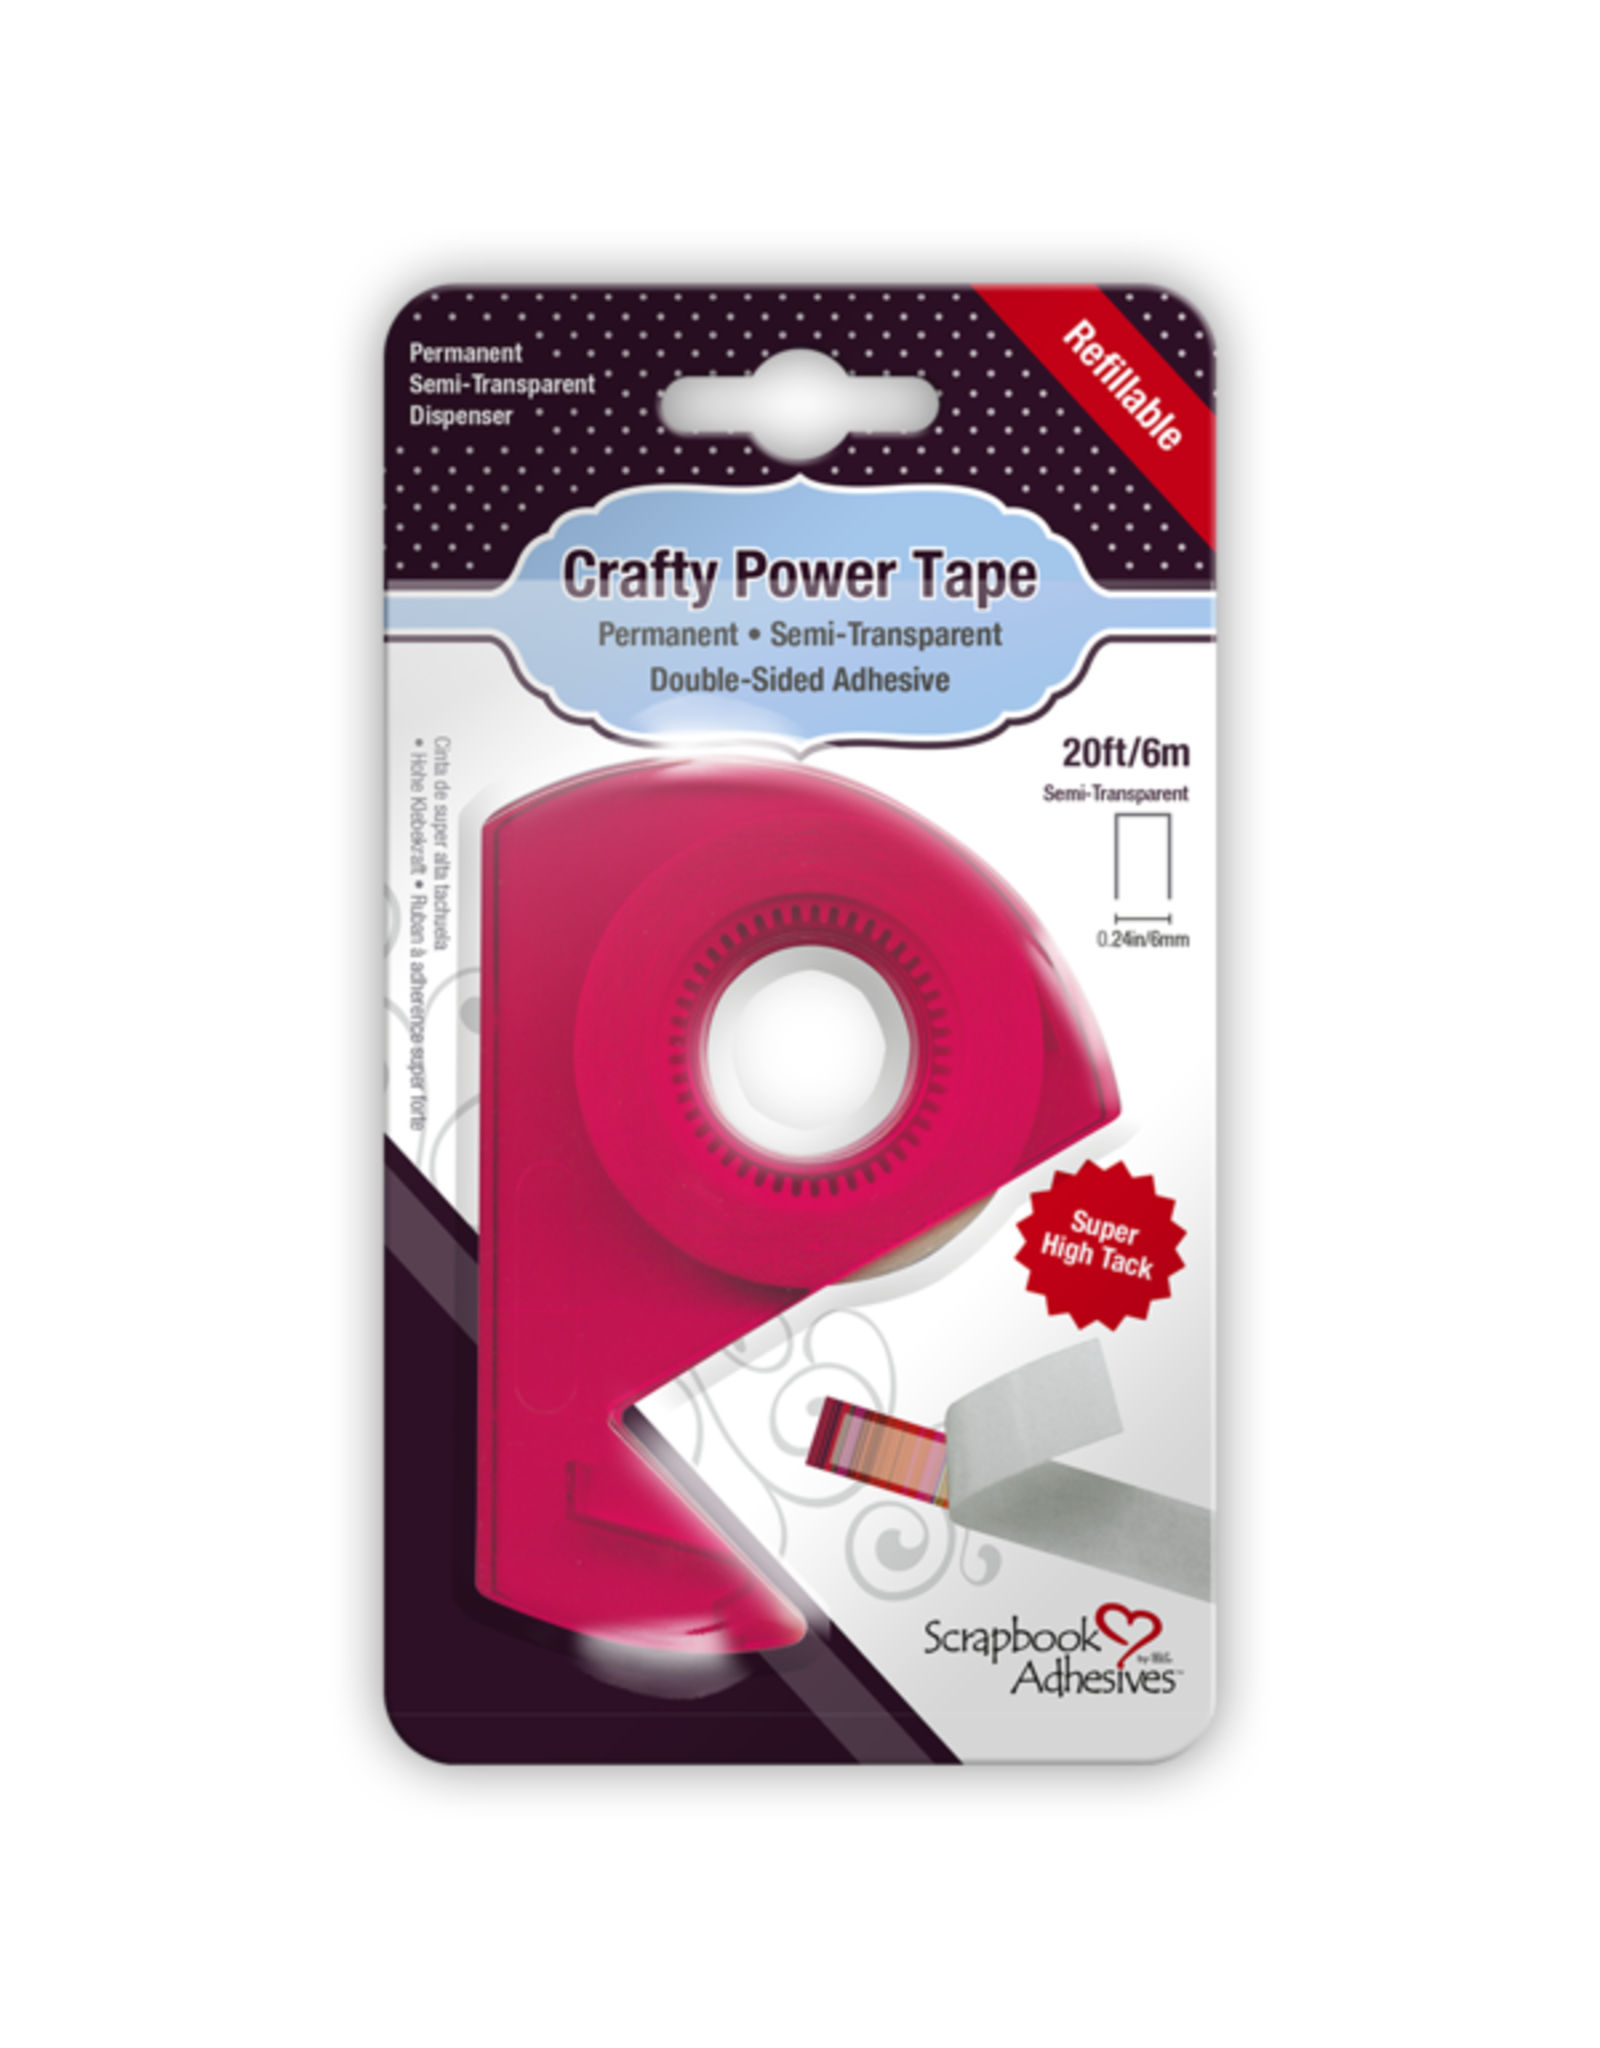 Scrapbook Adhesives Crafty Power Tape - 20’ in Dispenser